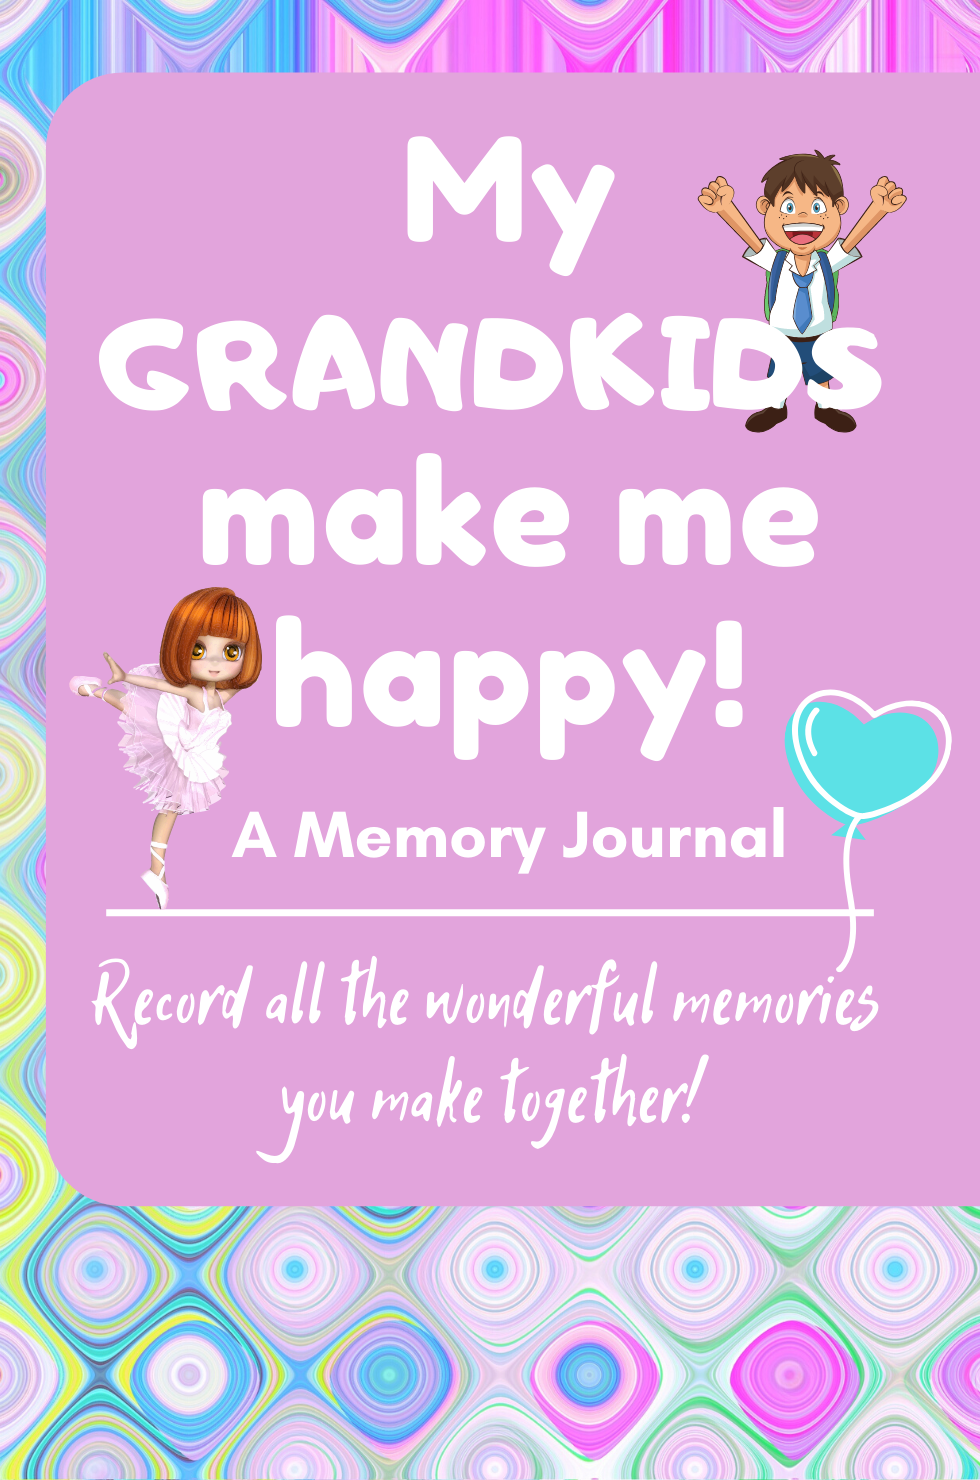 My Grandkids Make Me Happy! A Memory Journal